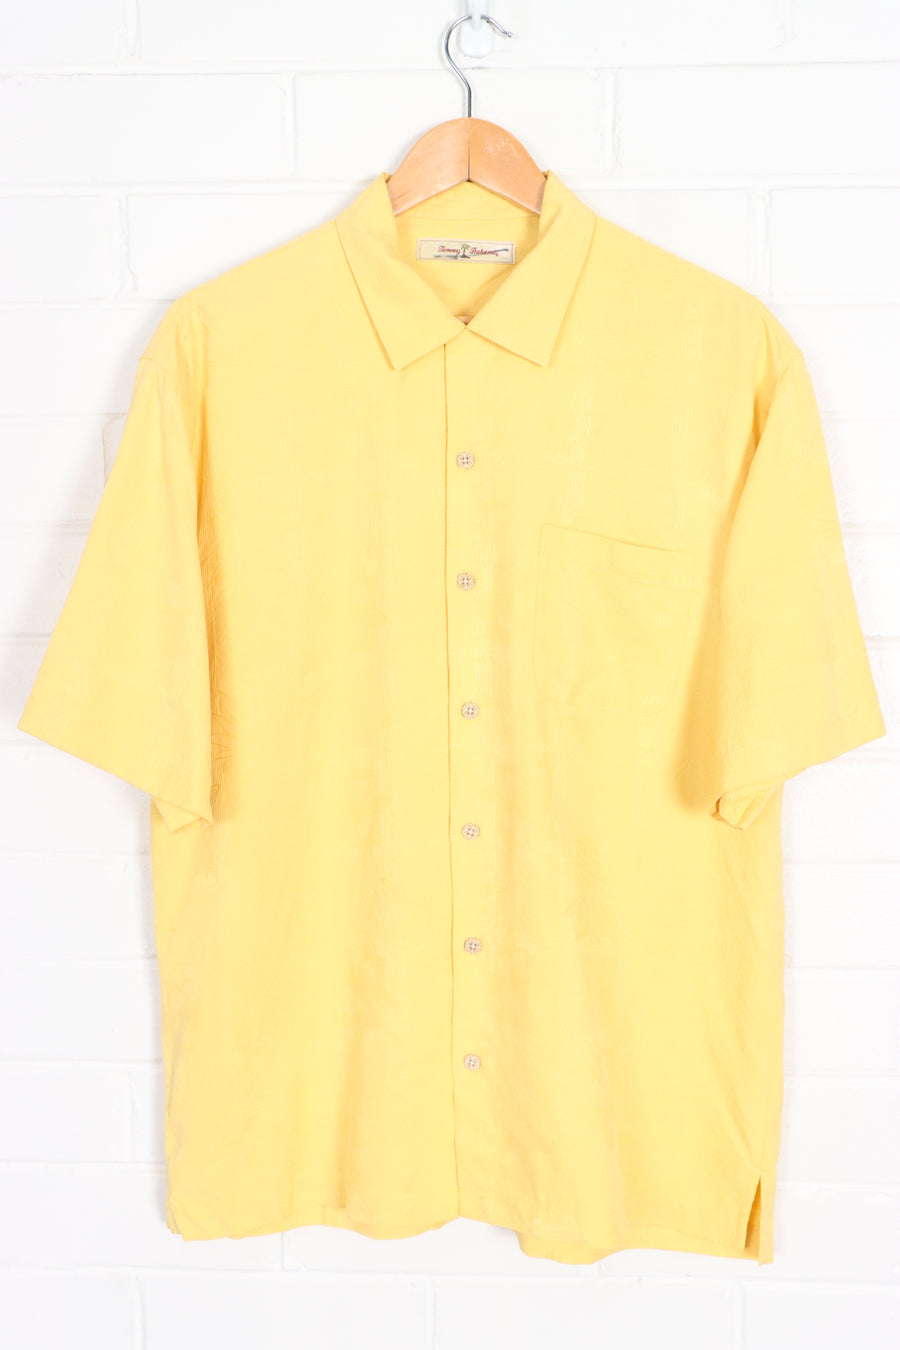 TOMMY BAHAMA Yellow Embossed Pineapples Hawaiian Silk Shirt (L)